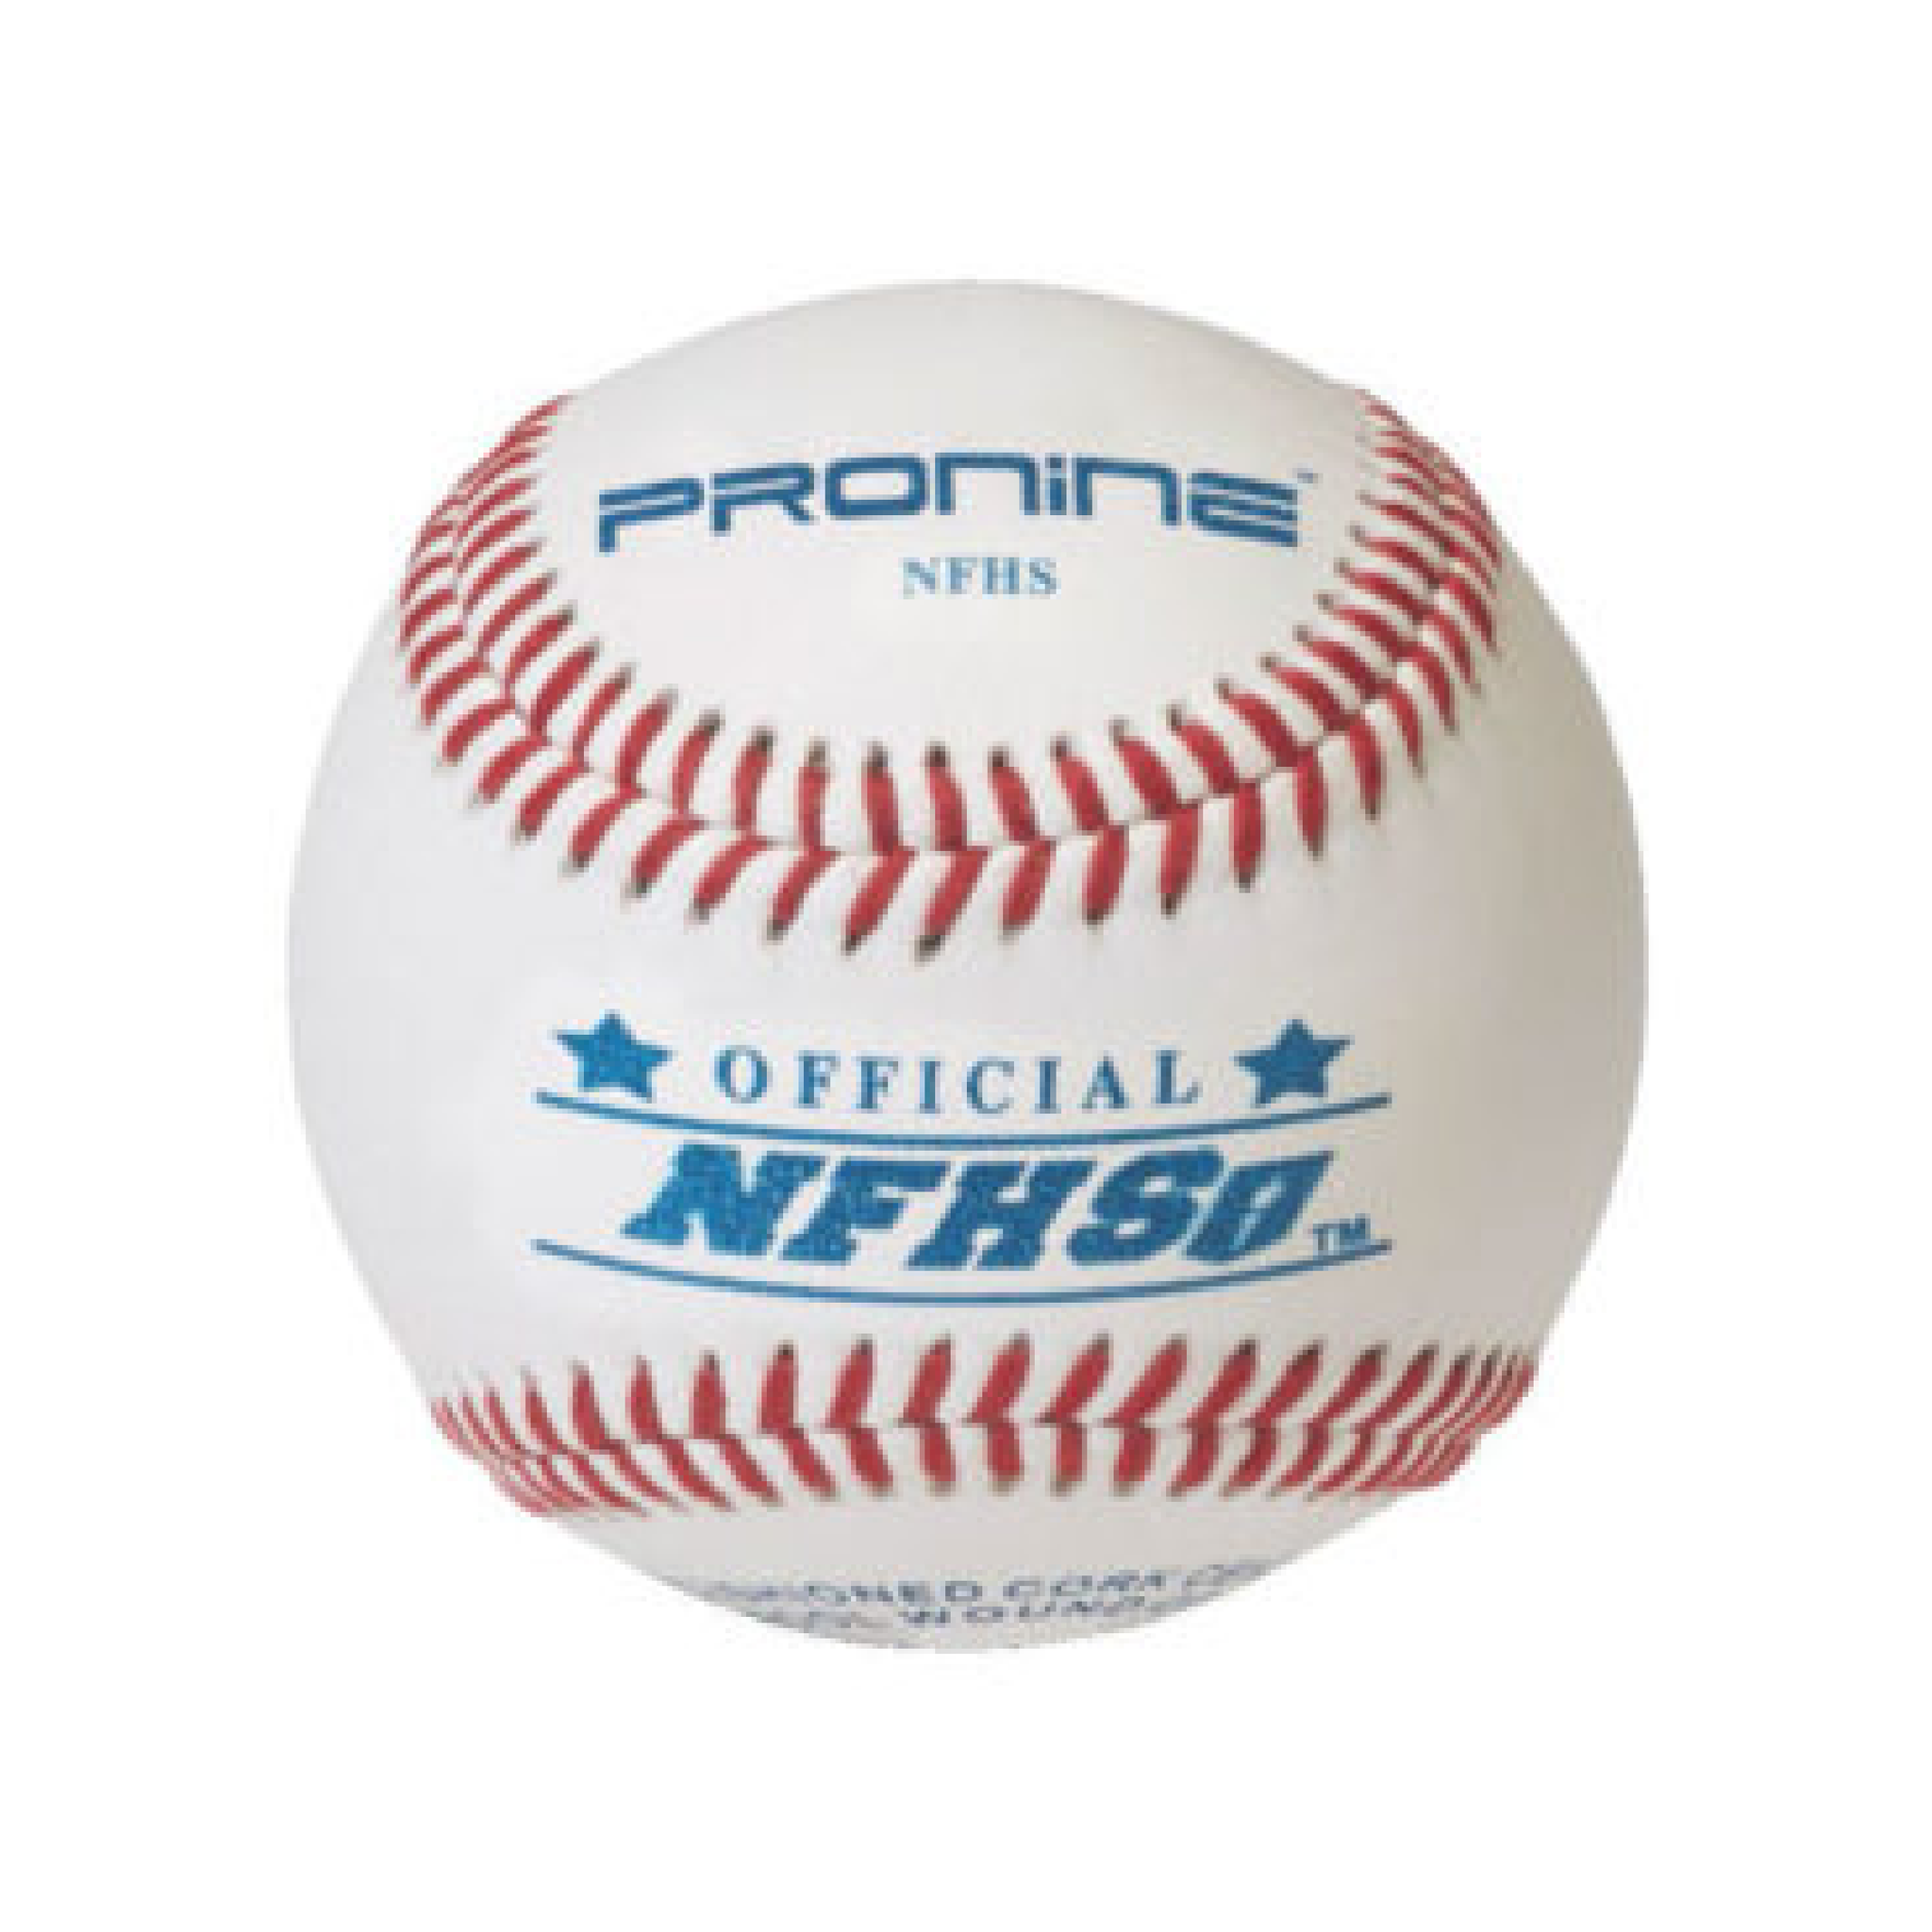 ProNine NFHS Baseballs